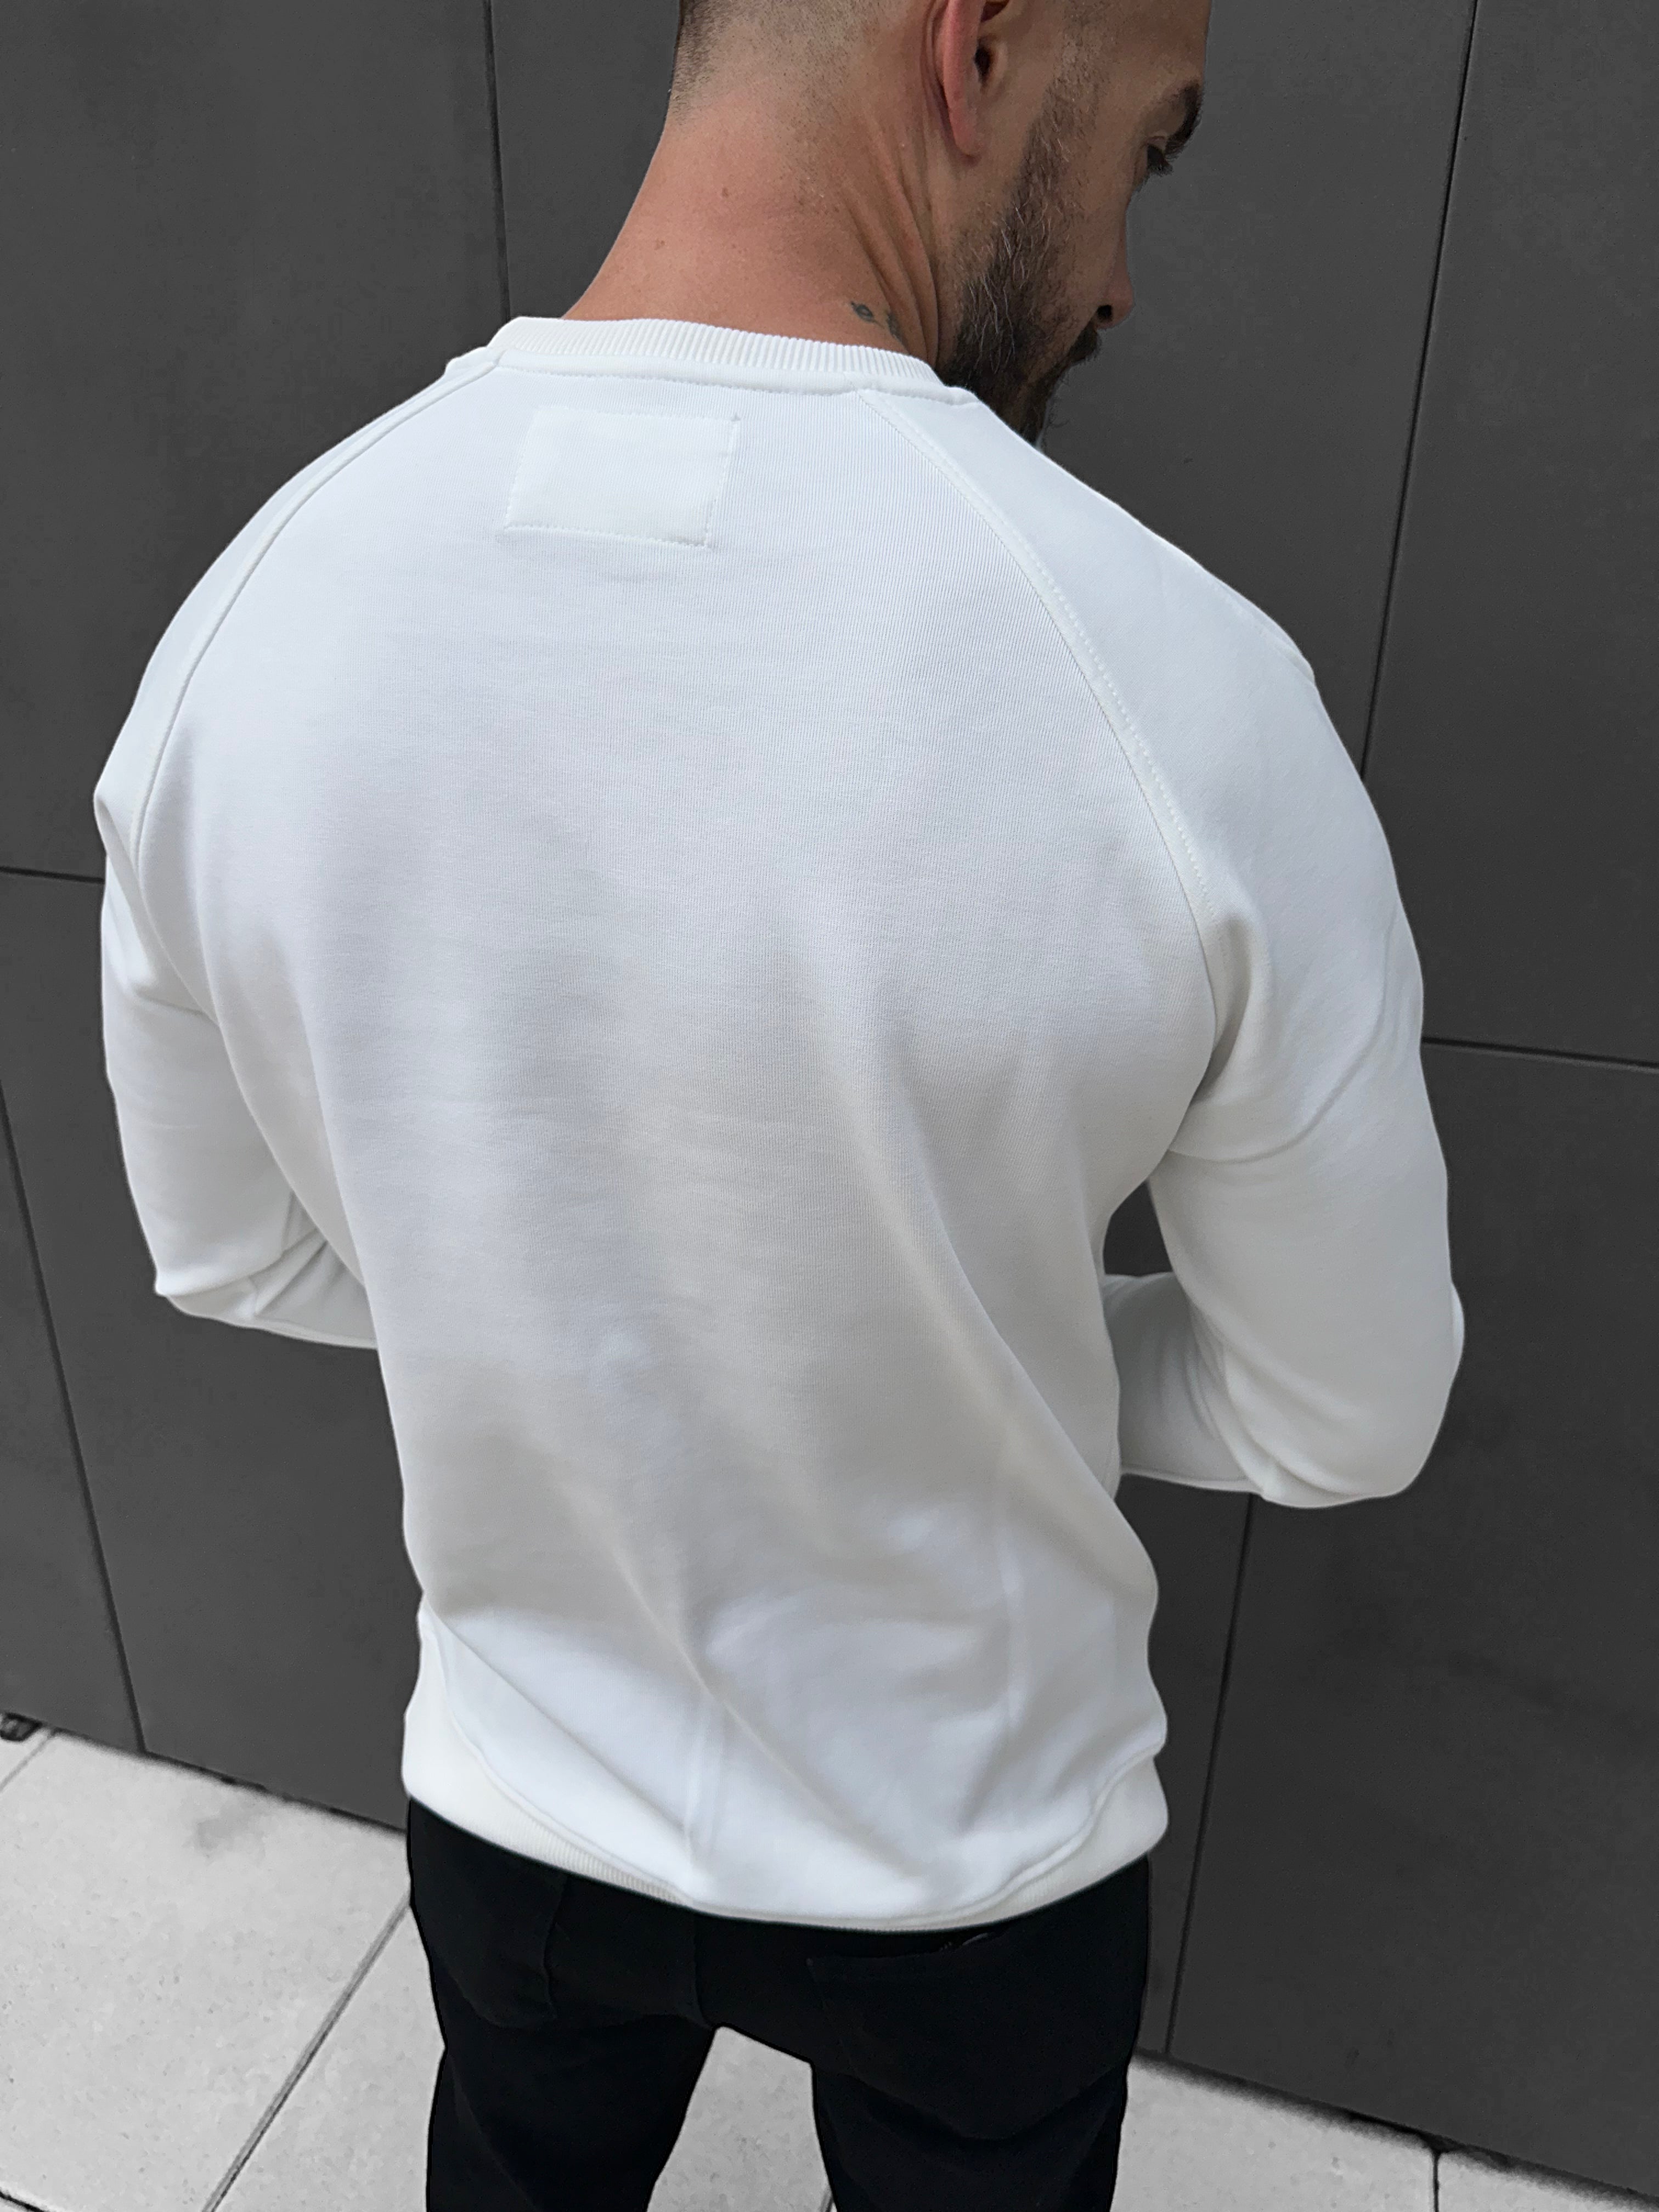 CHABRAND - White sweatshirt with black chabrand logo